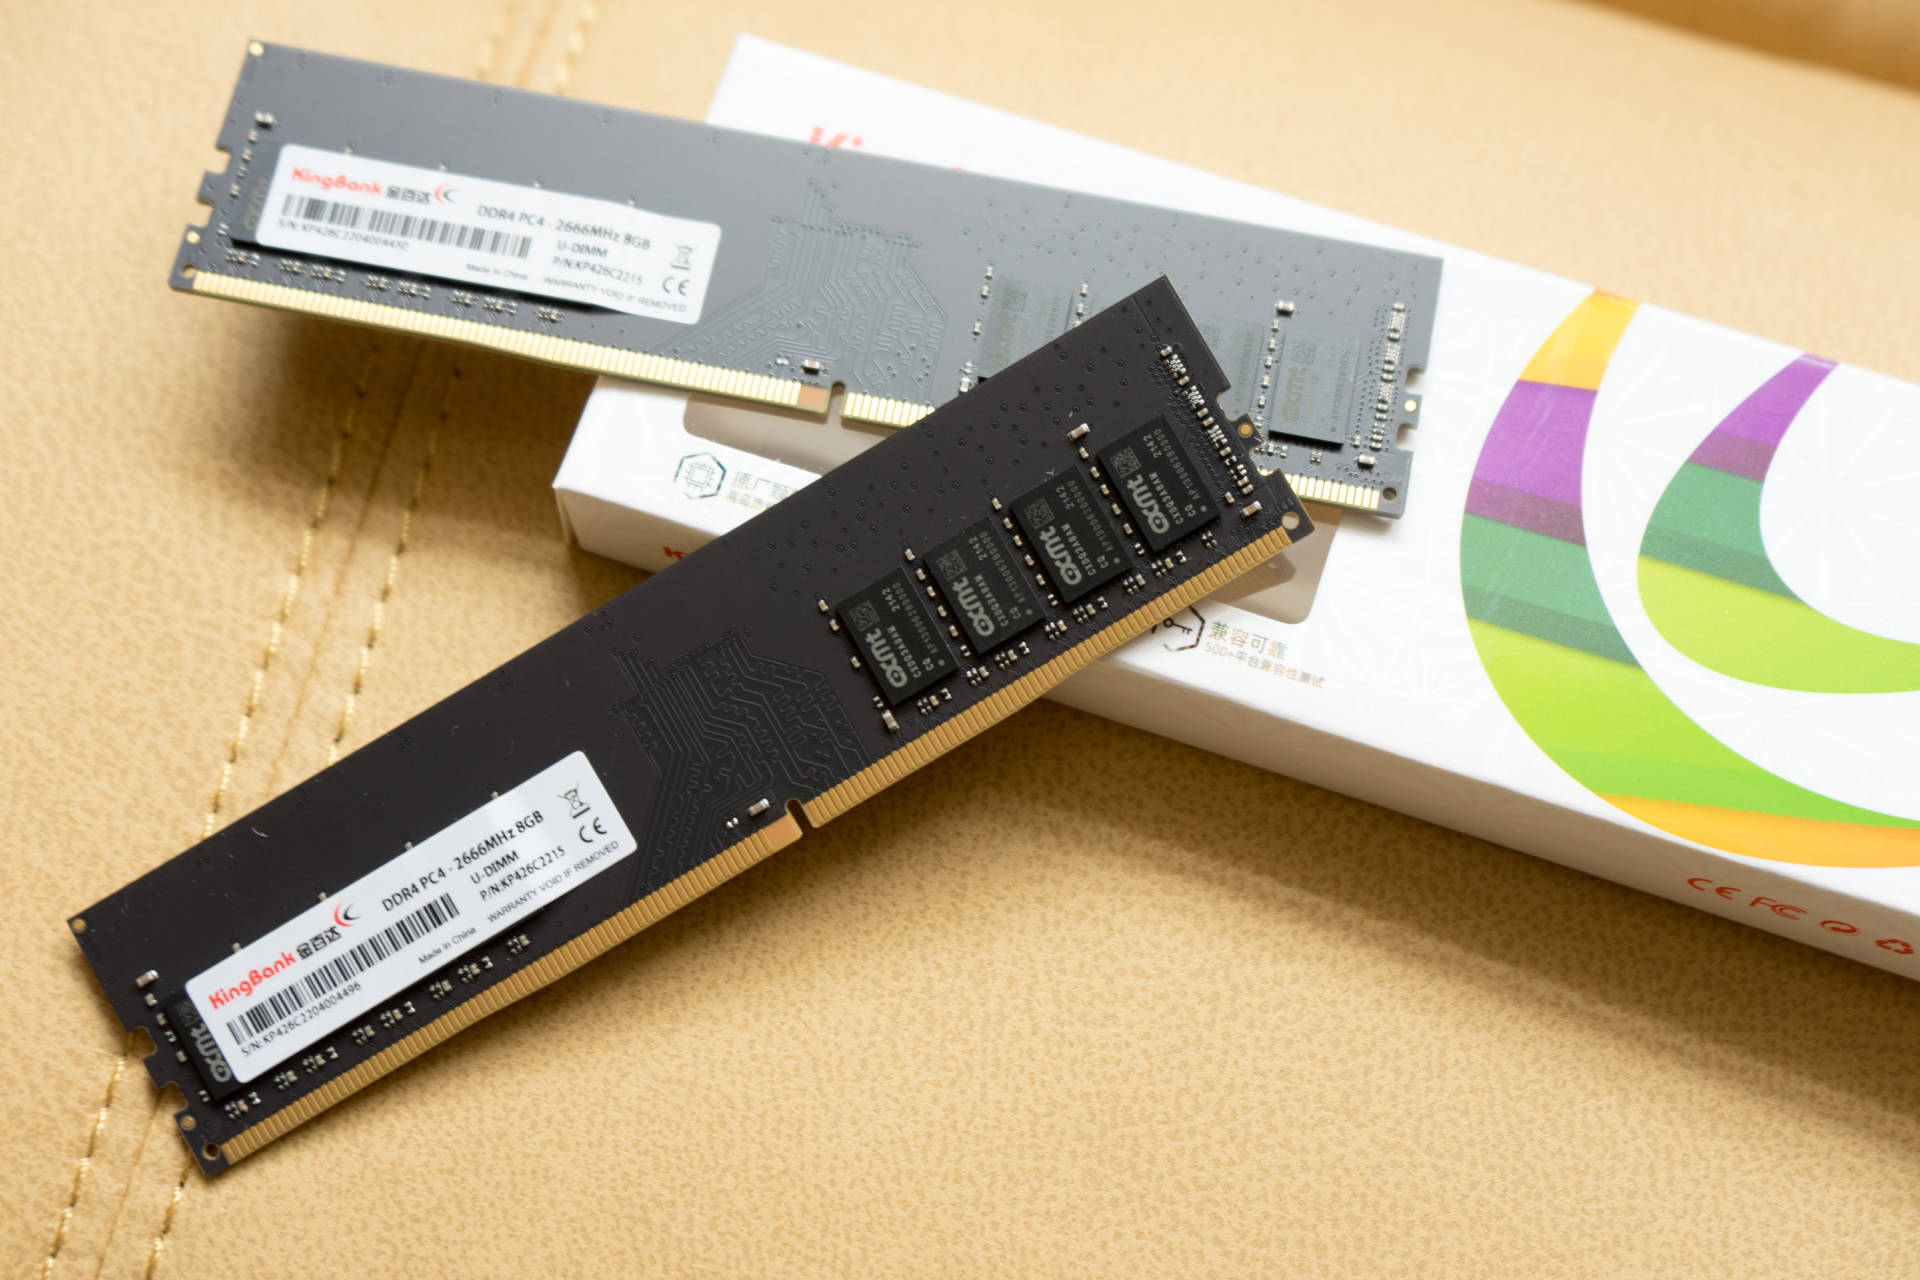 H61MK 主板是否支持 DDR4 内存？深入探讨计算机硬件兼容性  第8张